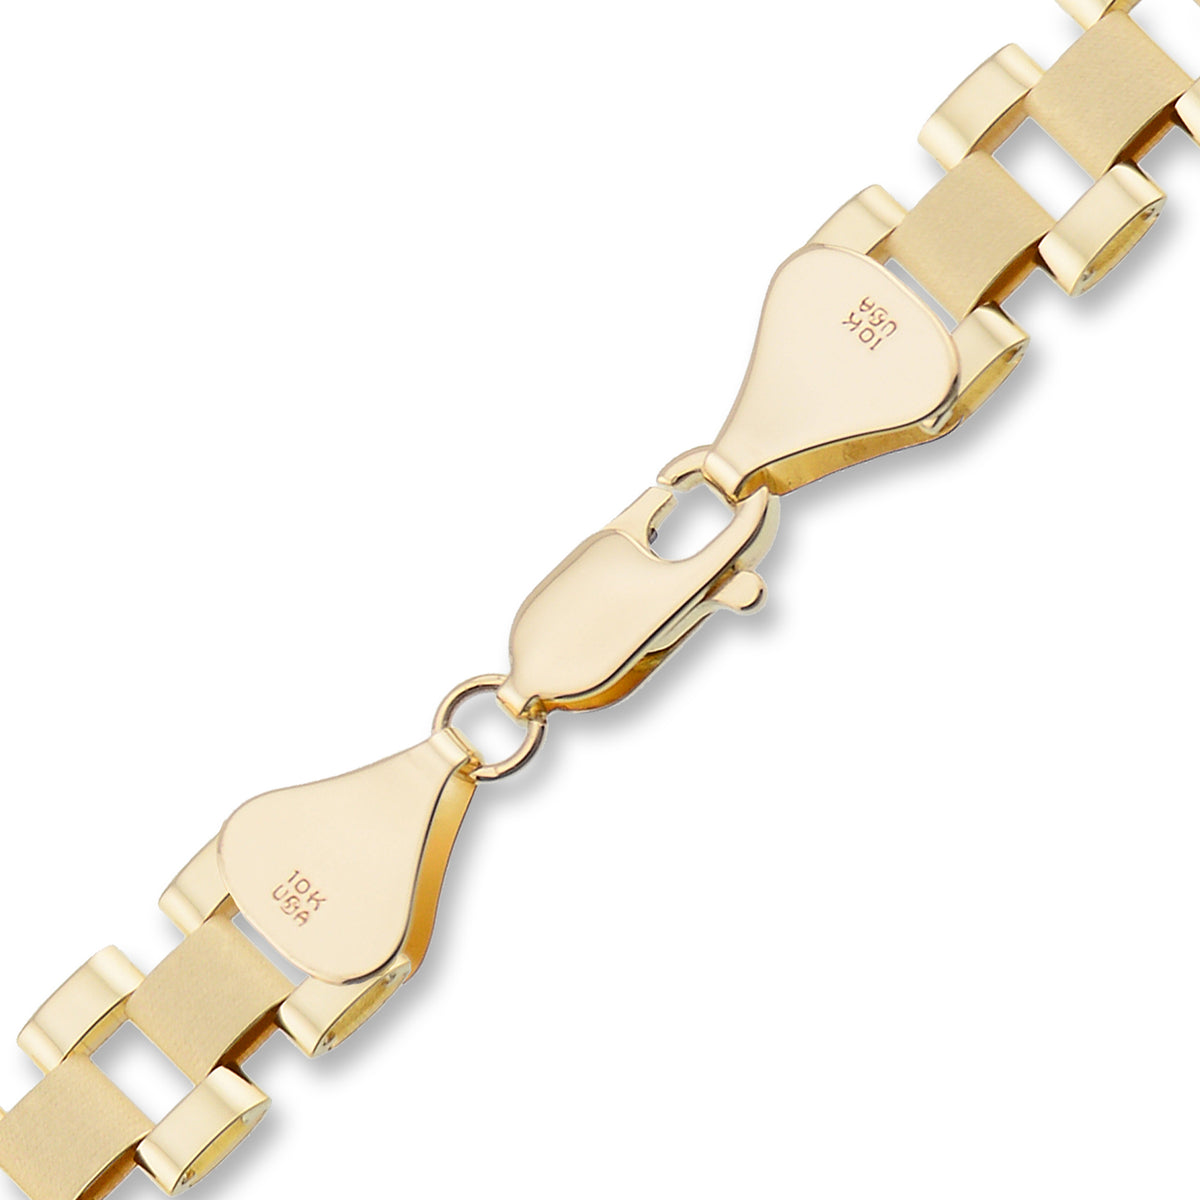 10K Solid Real Gold 8 mm Presidential Watch Band Style Hip Hop Bracelet or Anklet